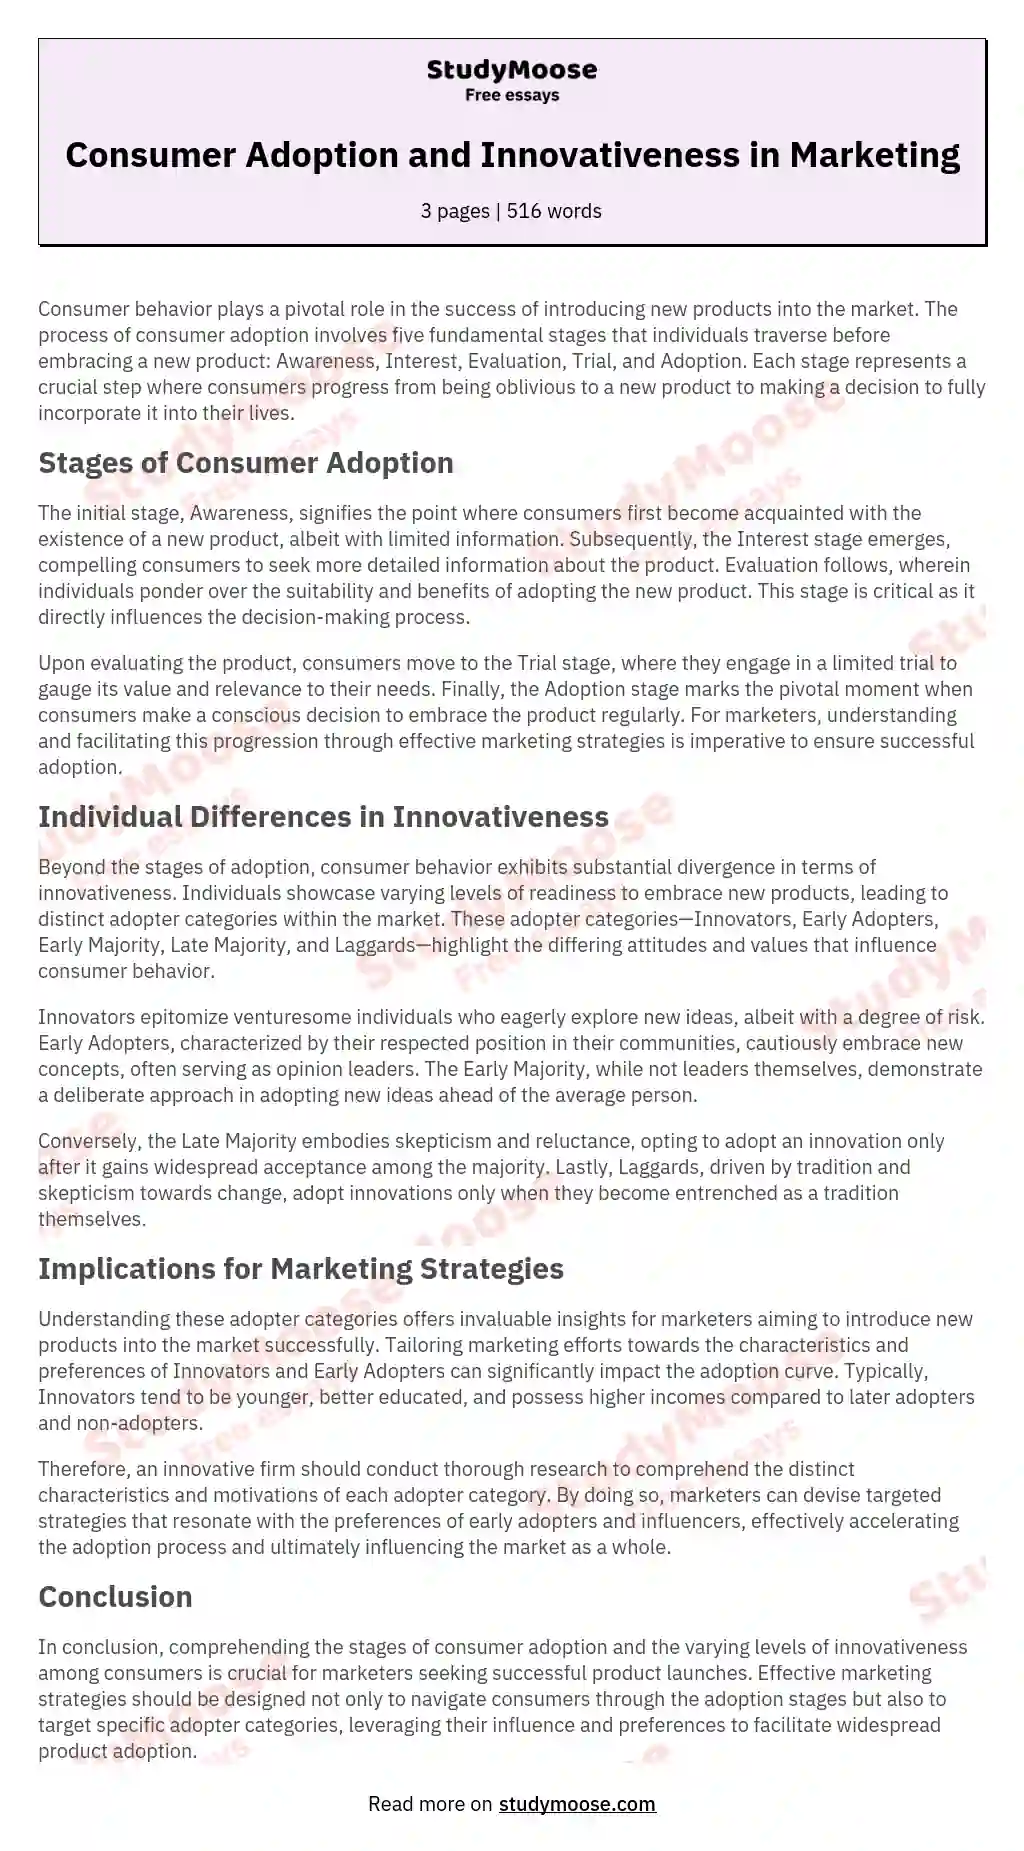 Consumer Adoption and Innovativeness in Marketing essay